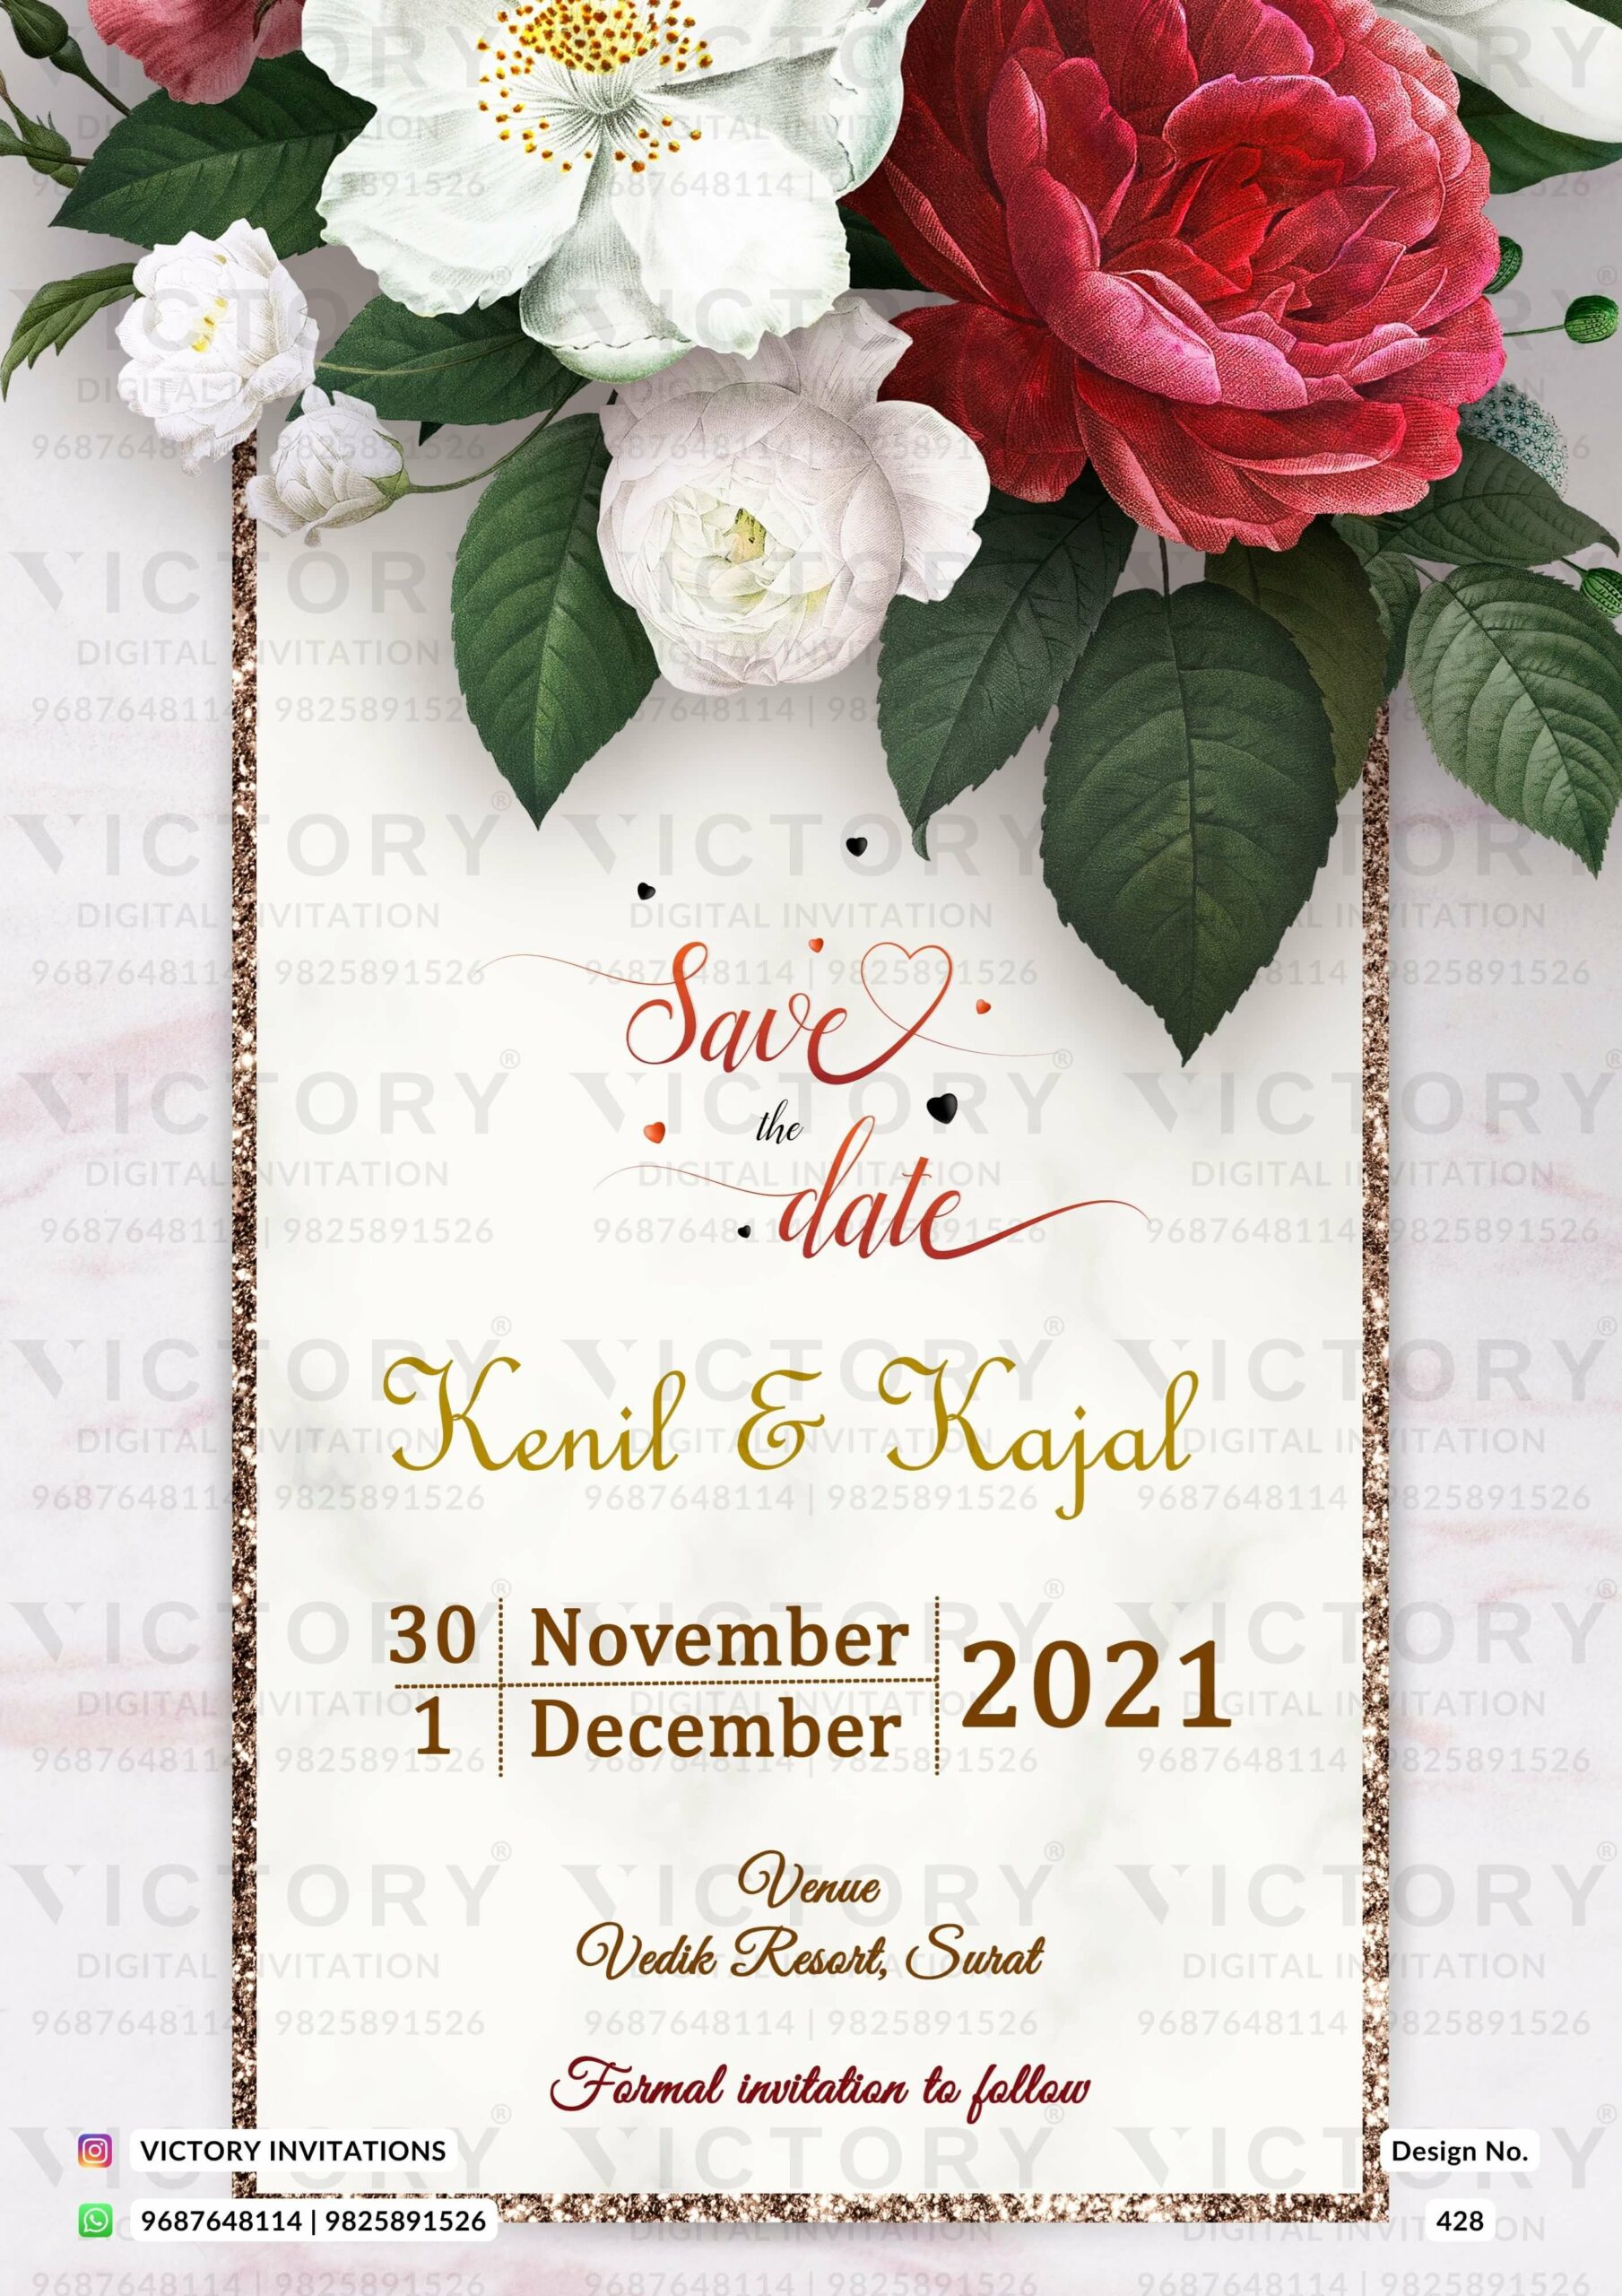 Save the Date digital invitation card design no.428